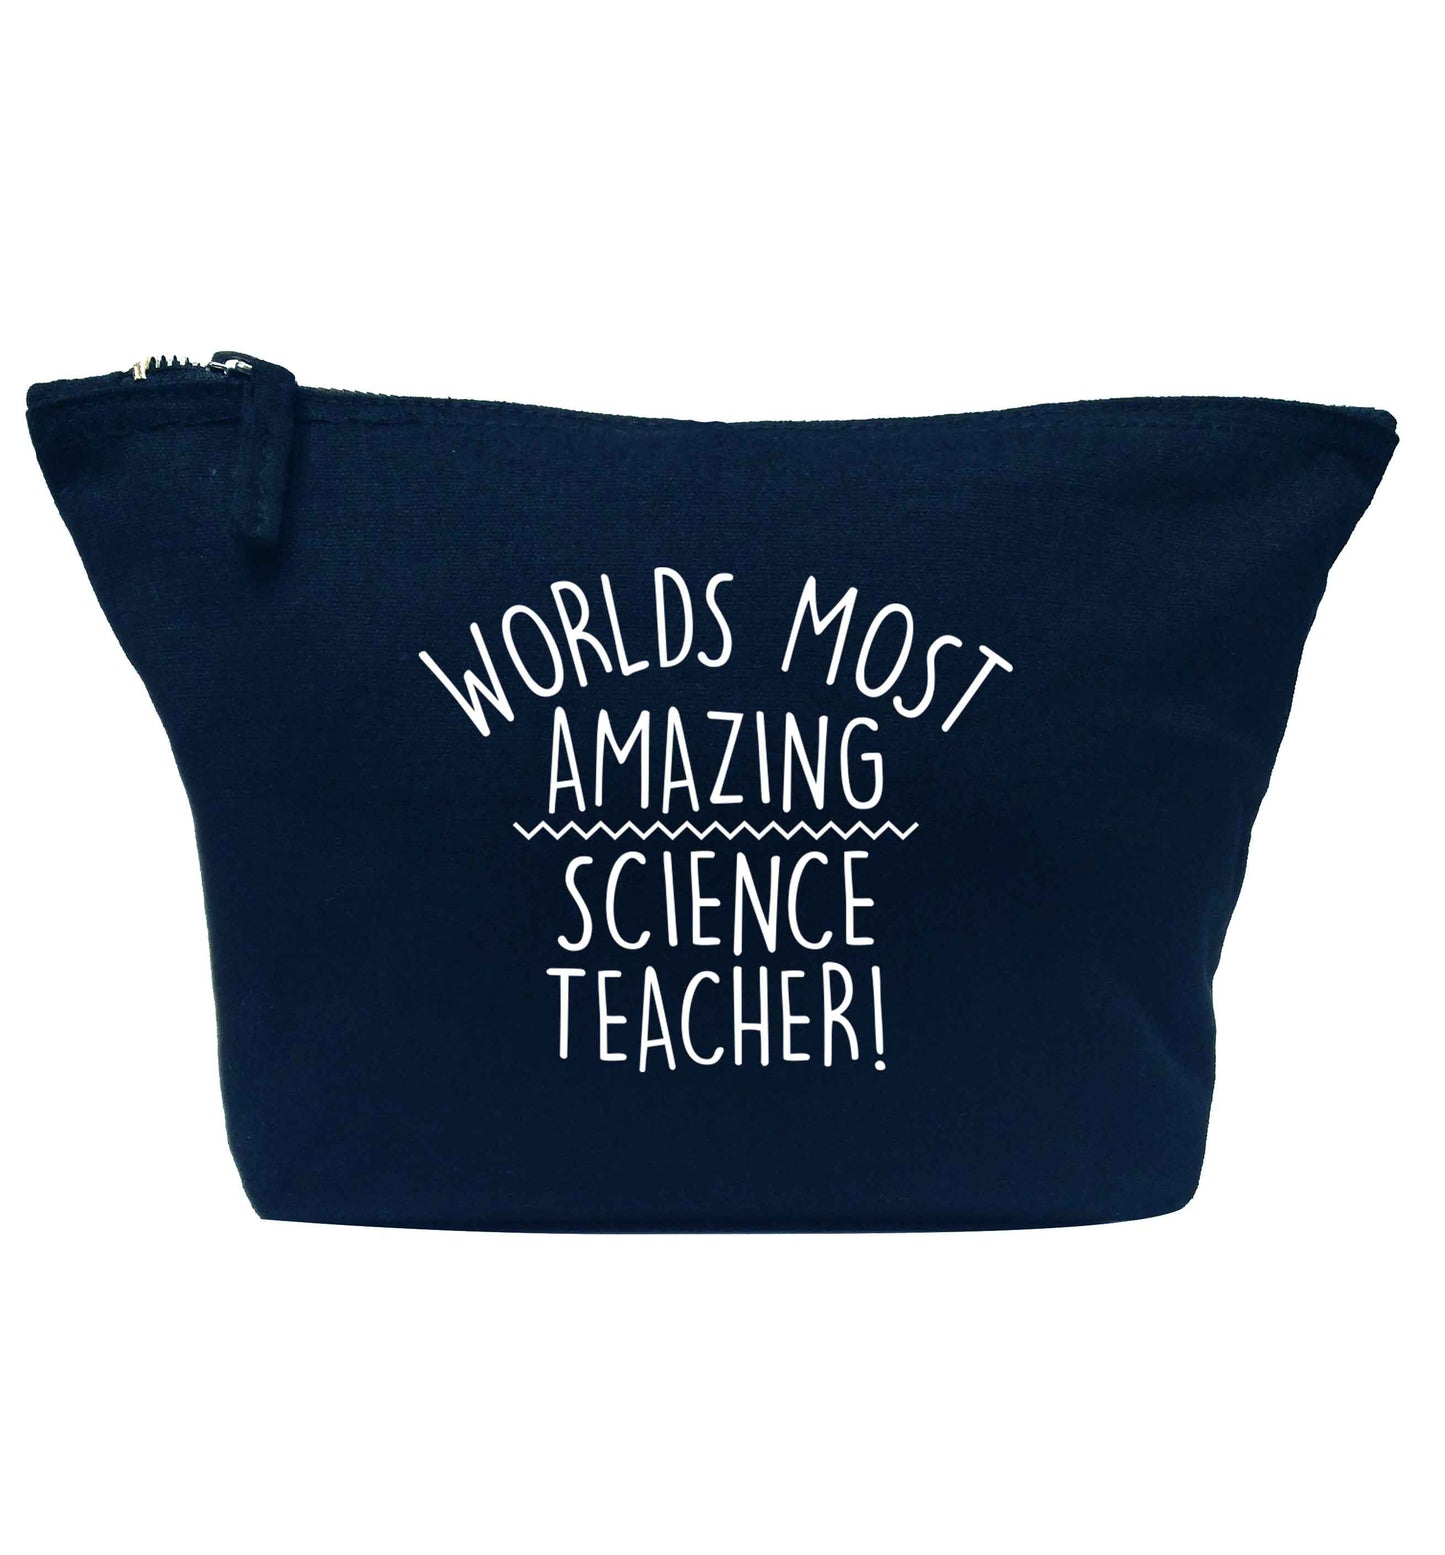 Worlds most amazing science teacher navy makeup bag